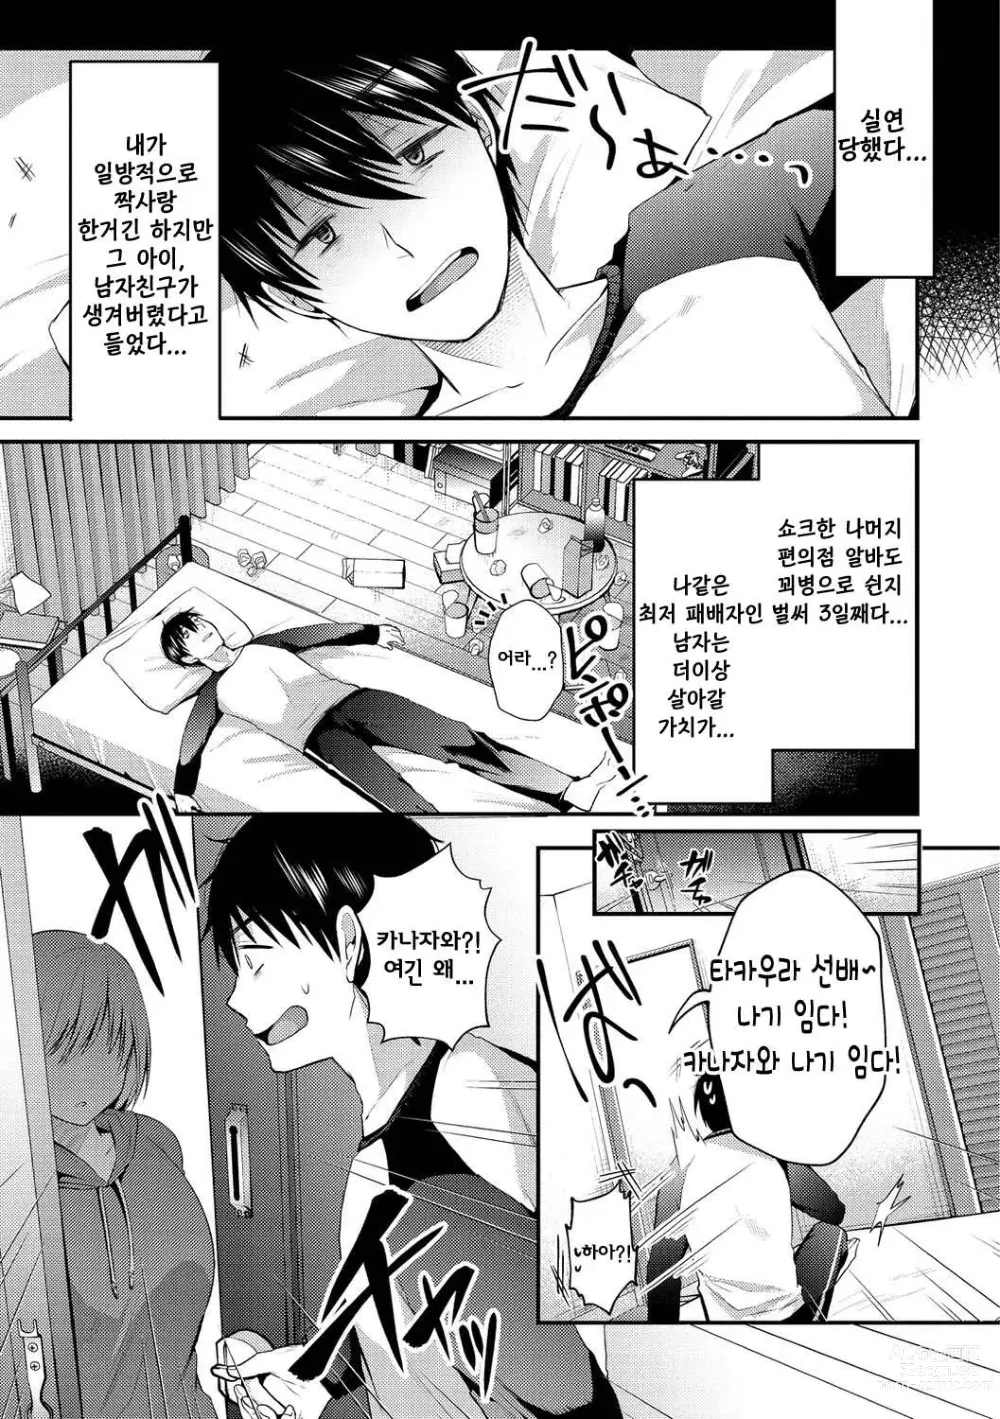 Page 1 of manga 있잖아, 선배!